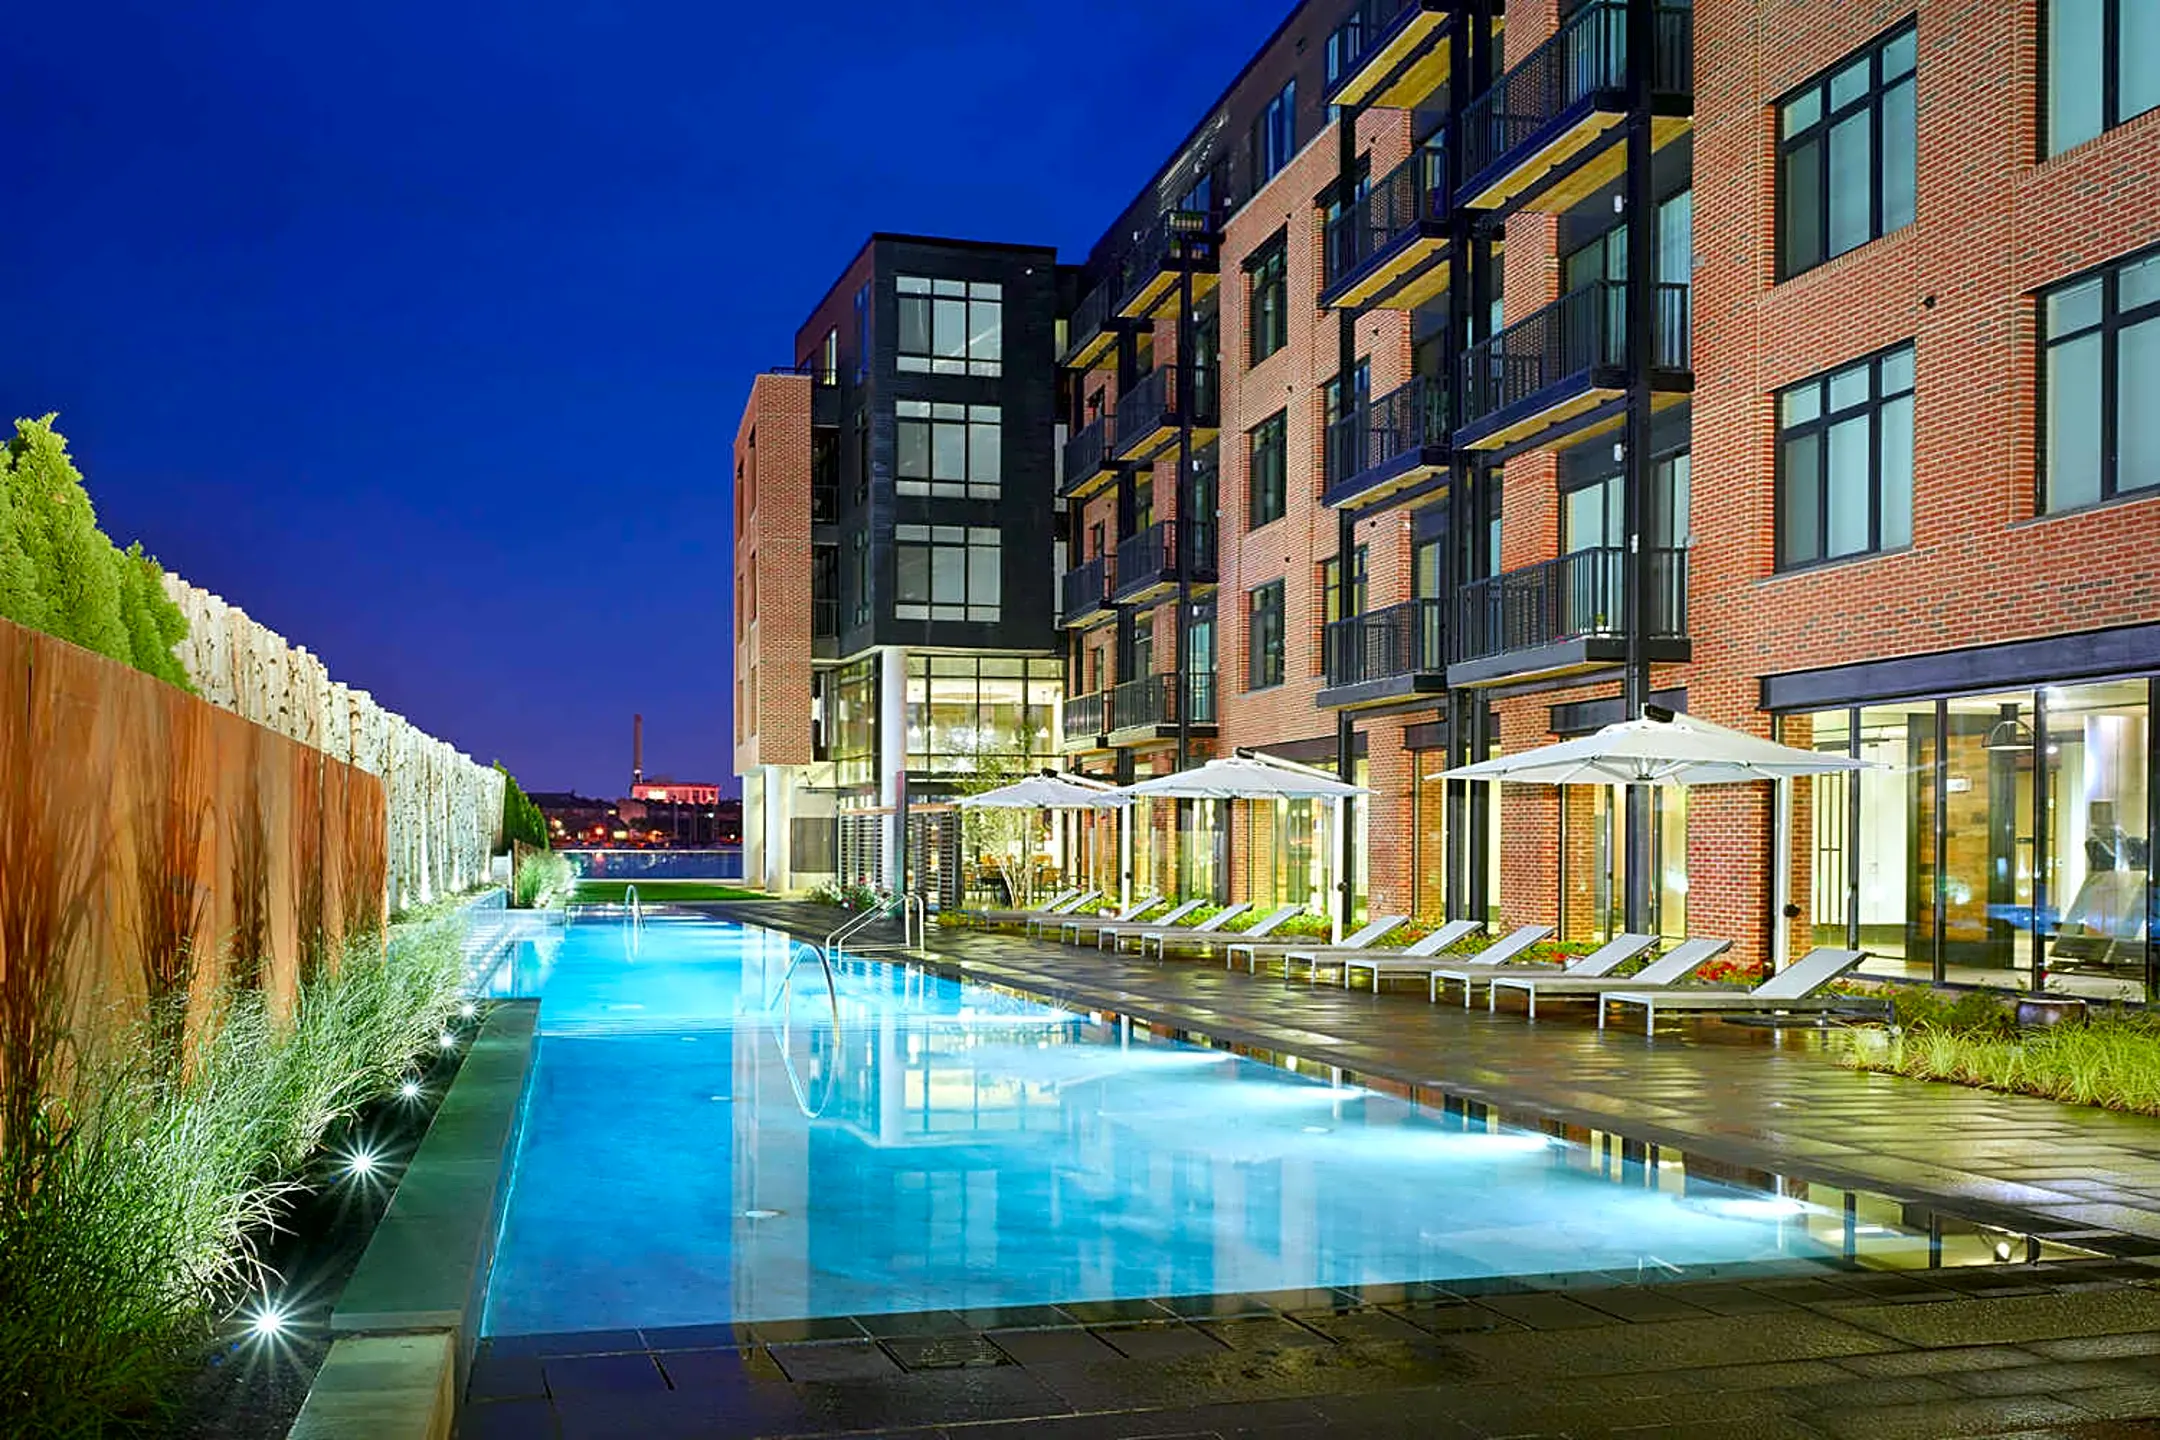 Pool - Union Wharf Apartments - Baltimore, MD